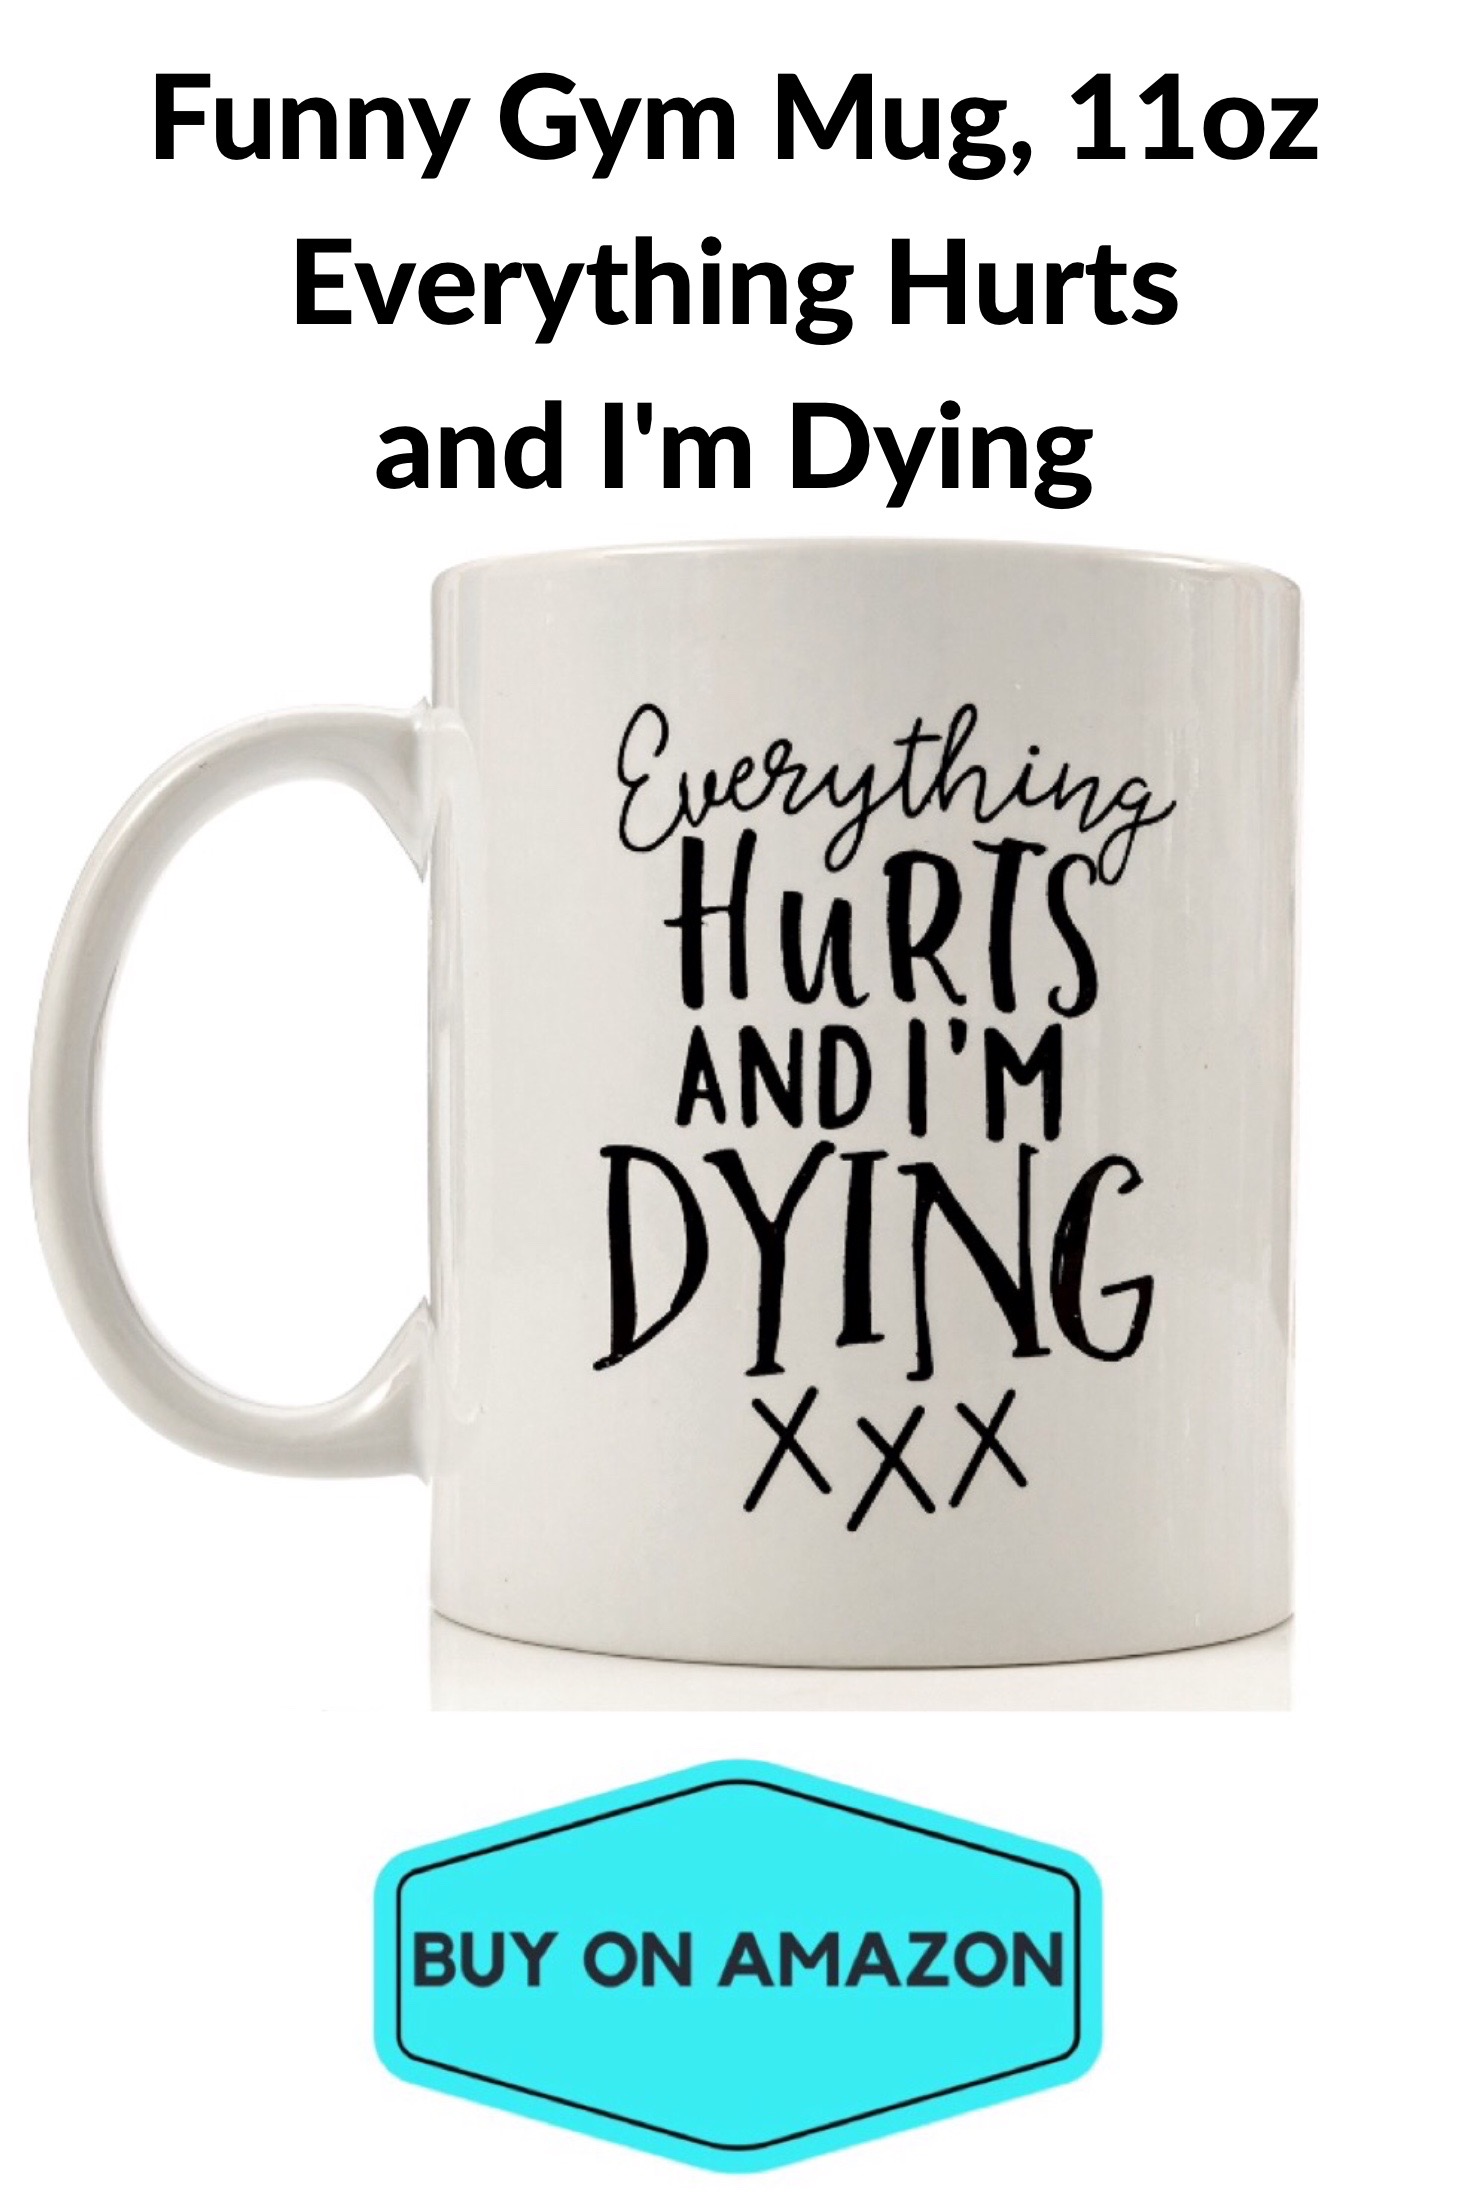 "Everything Hurts and I'm Dying' Funny Gym Mug, 11oz